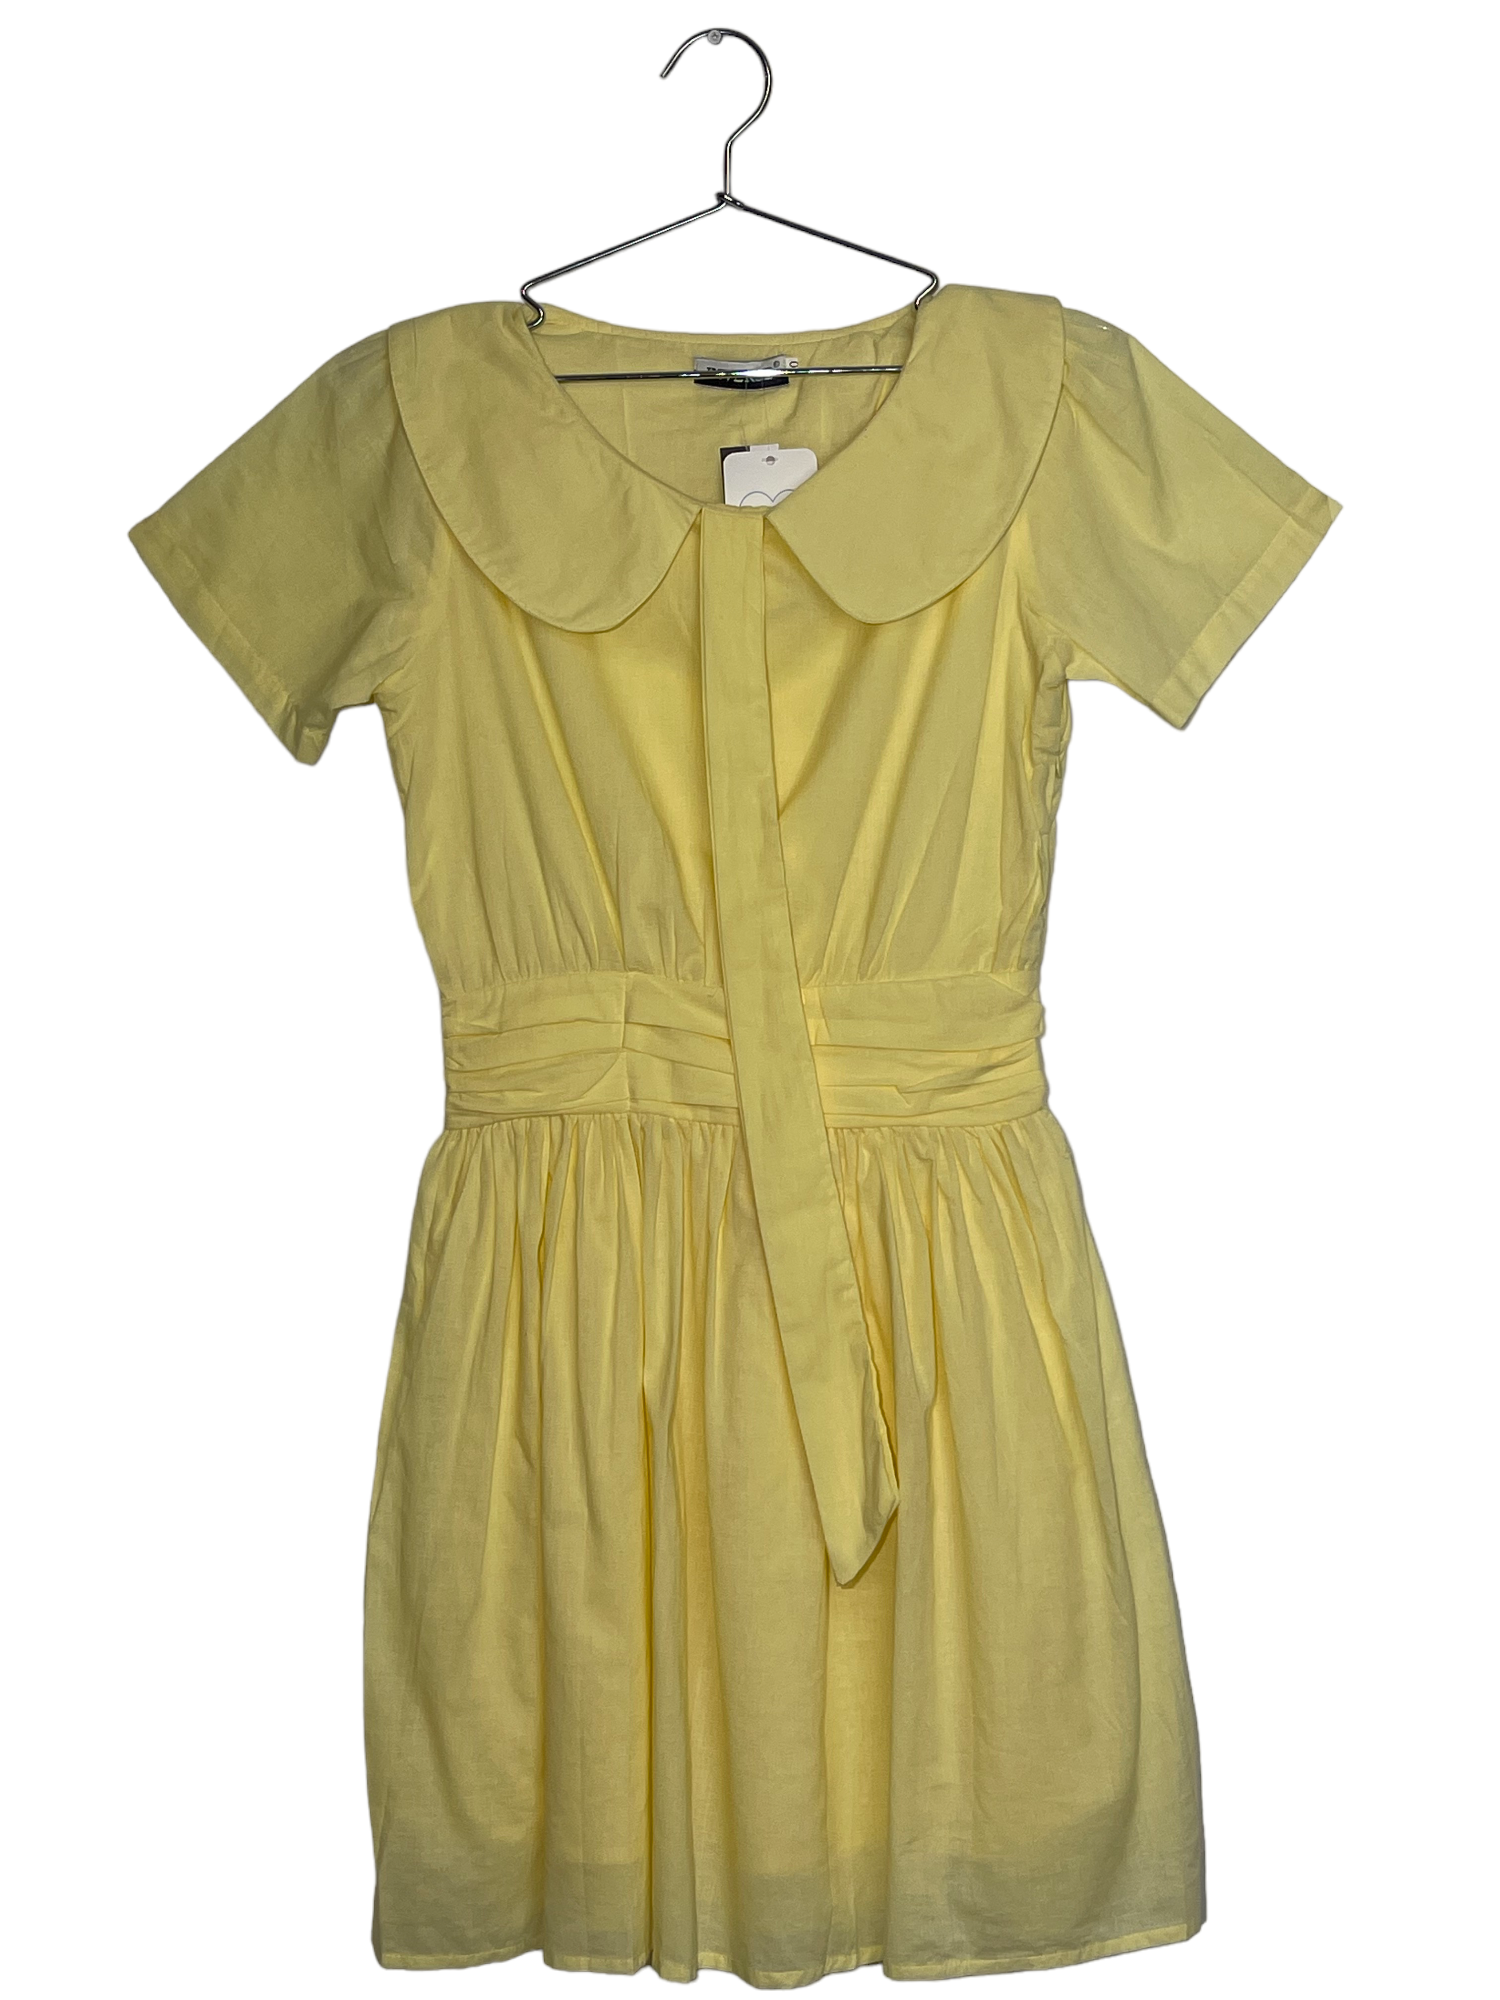 Pastel Yellow Bow Dress